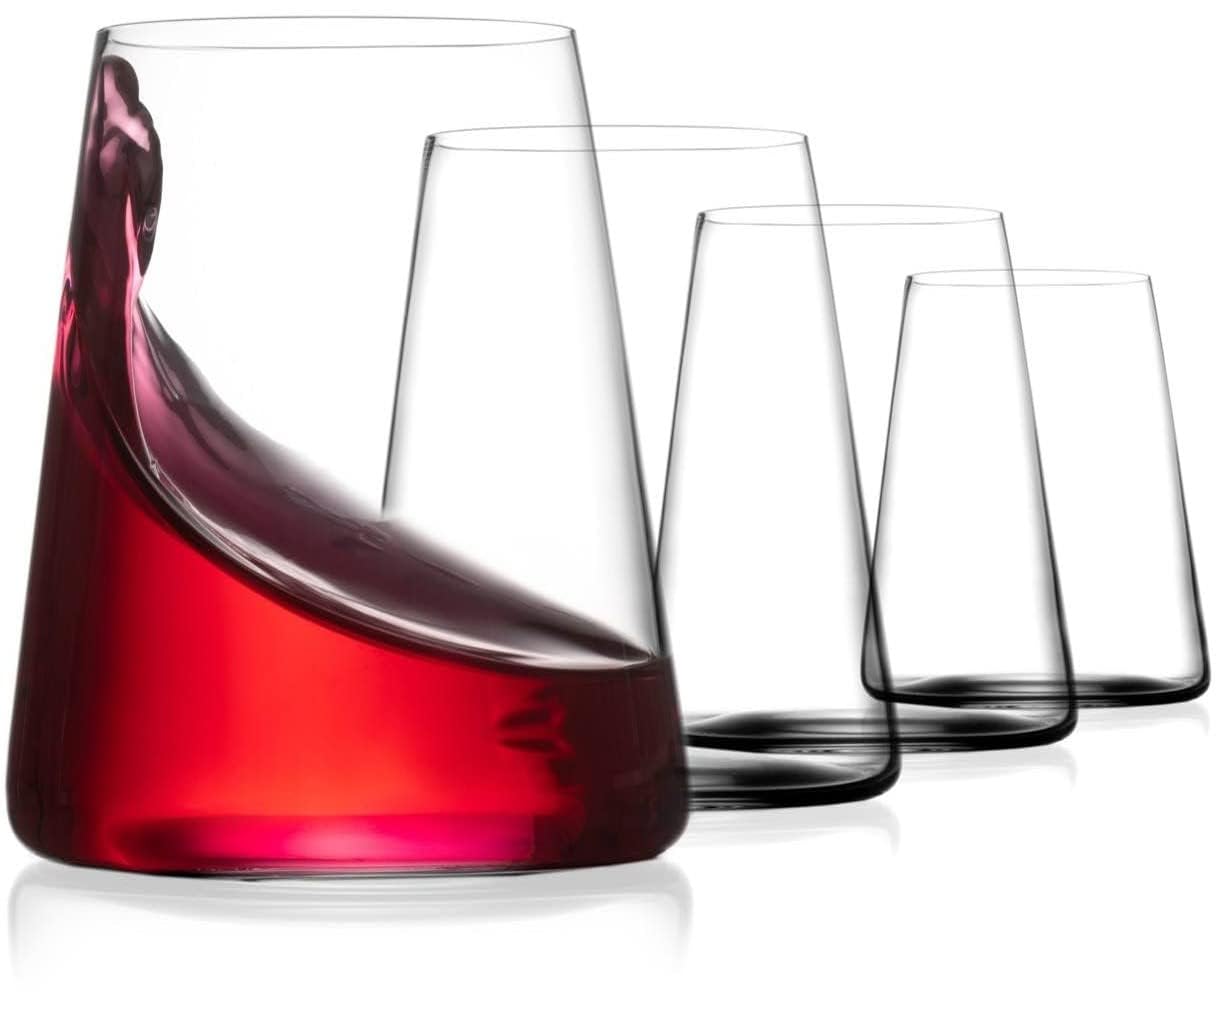 BENETI German MadeWine Glasses, High-End Red and White Wine Glasses Set, Premium Crystal Glassware  - Like New